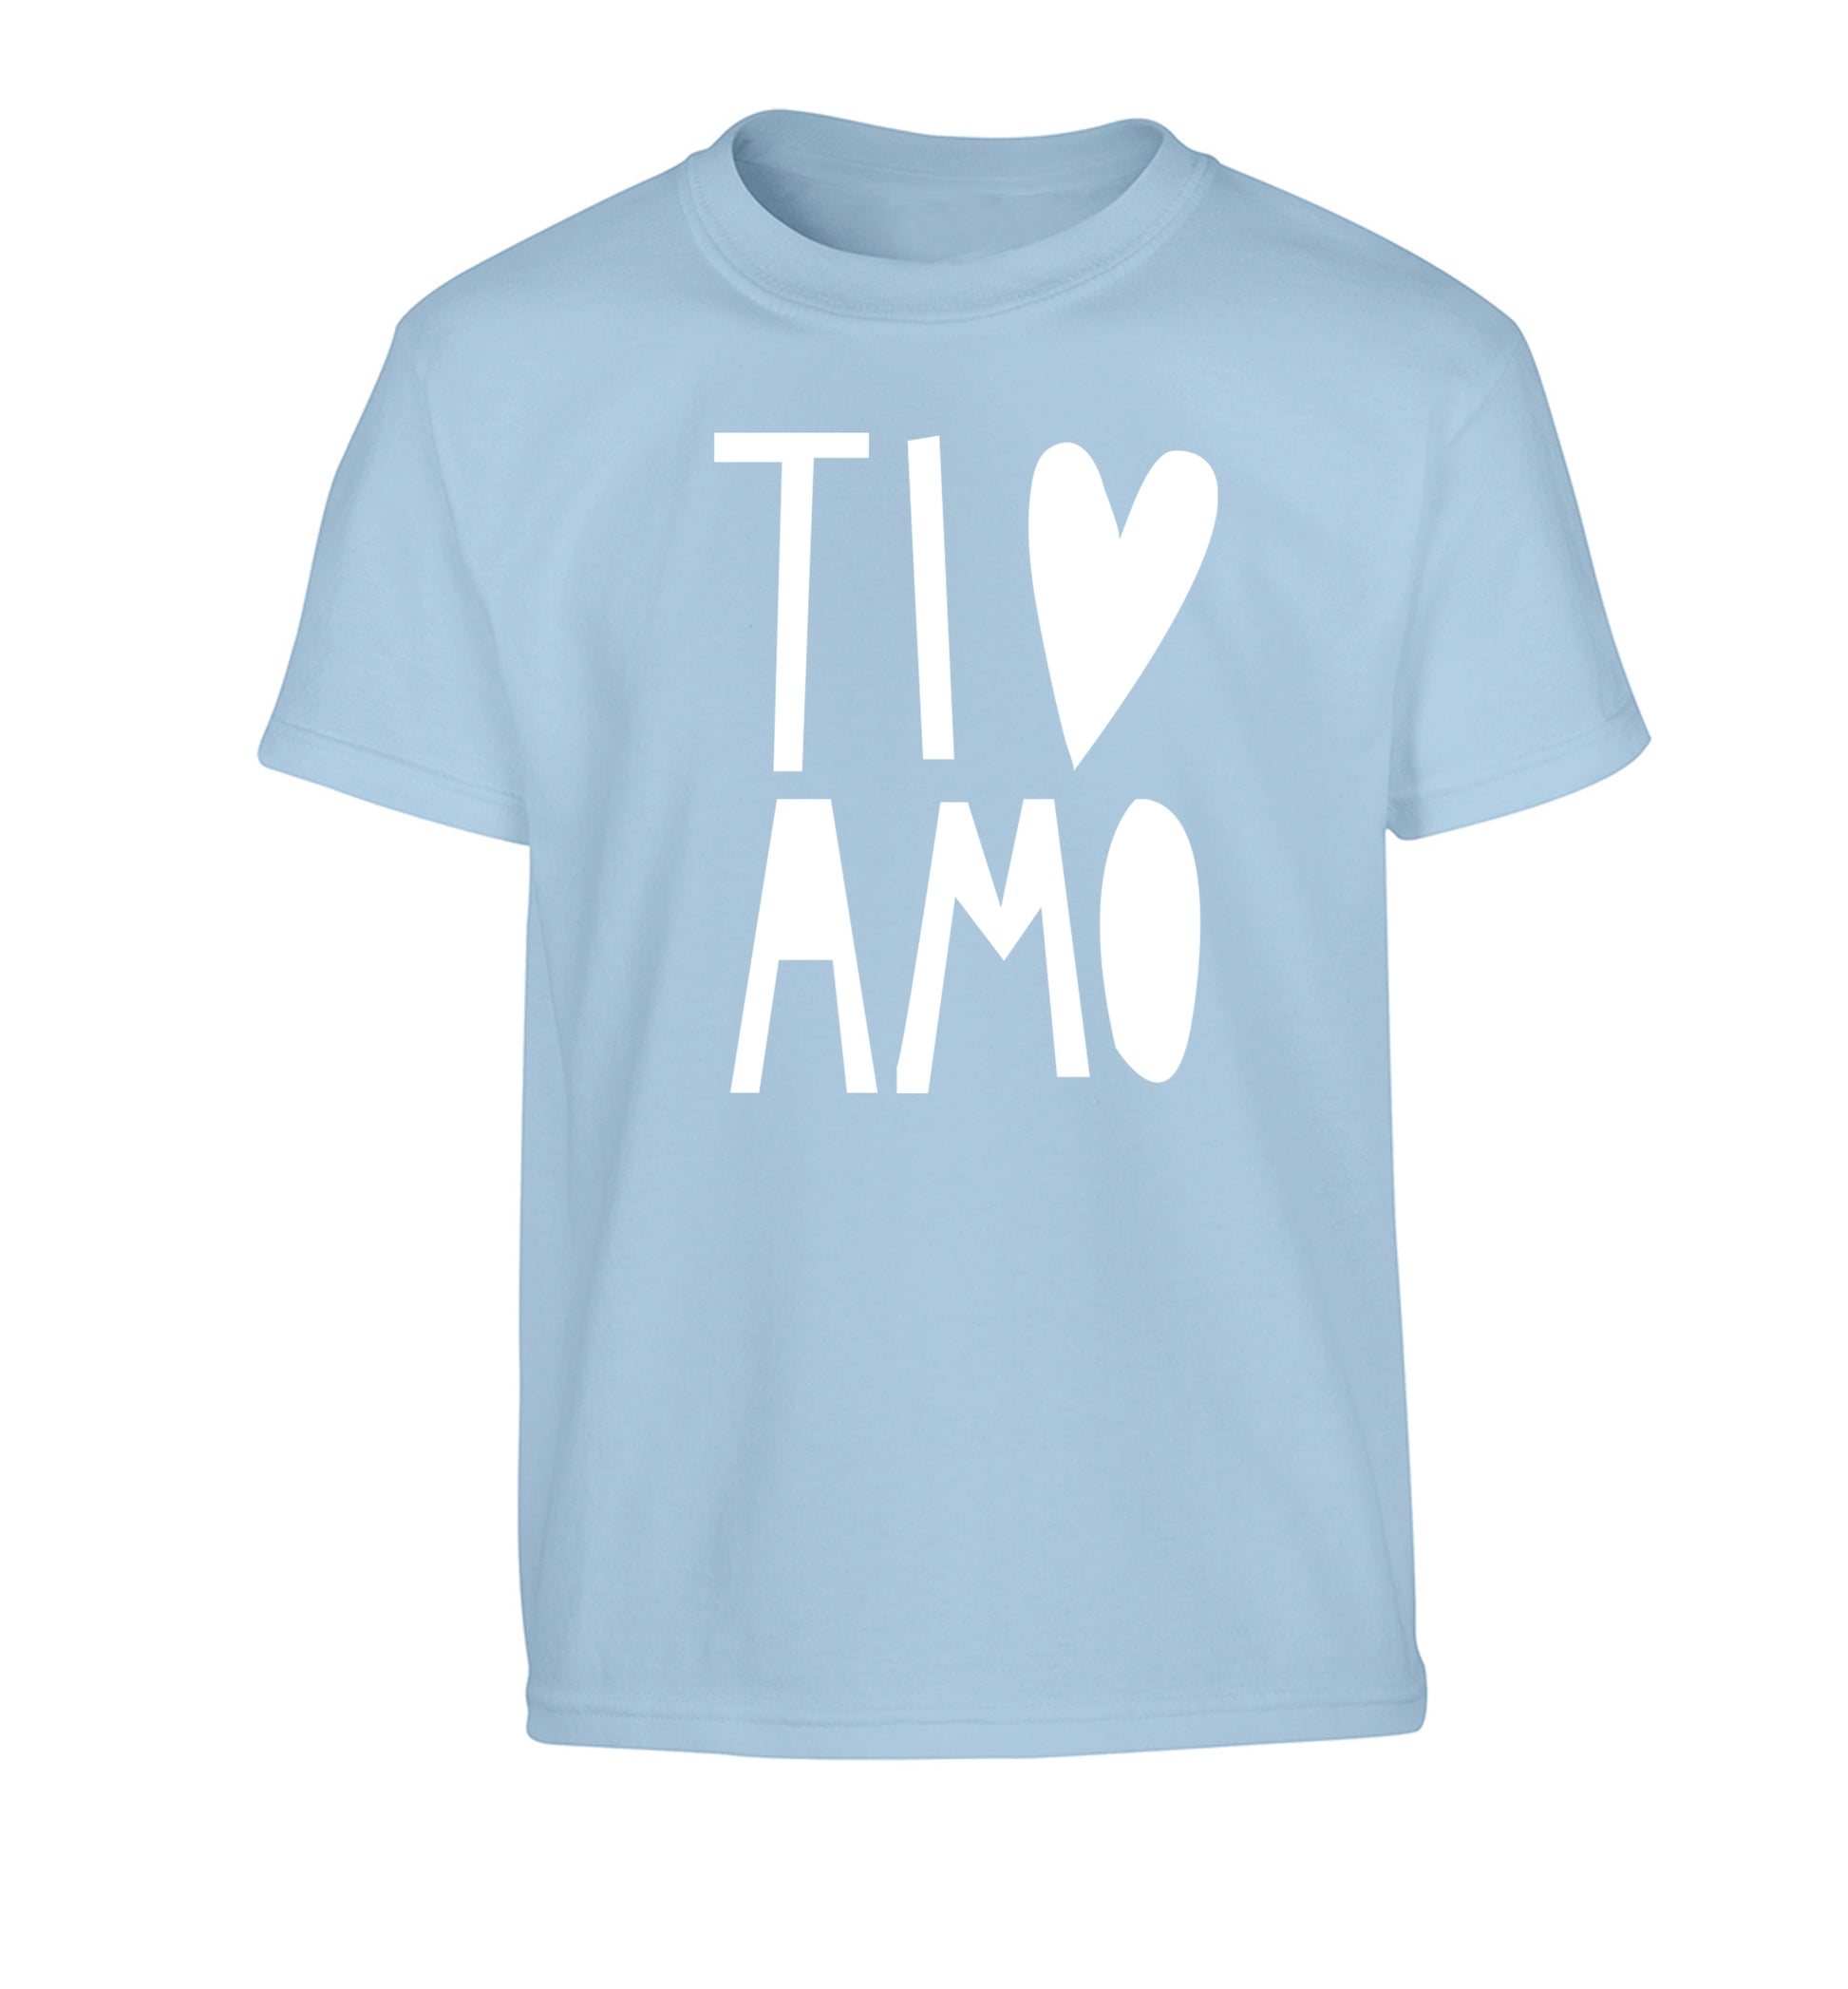 Ti amo - I love you Children's light blue Tshirt 12-13 Years